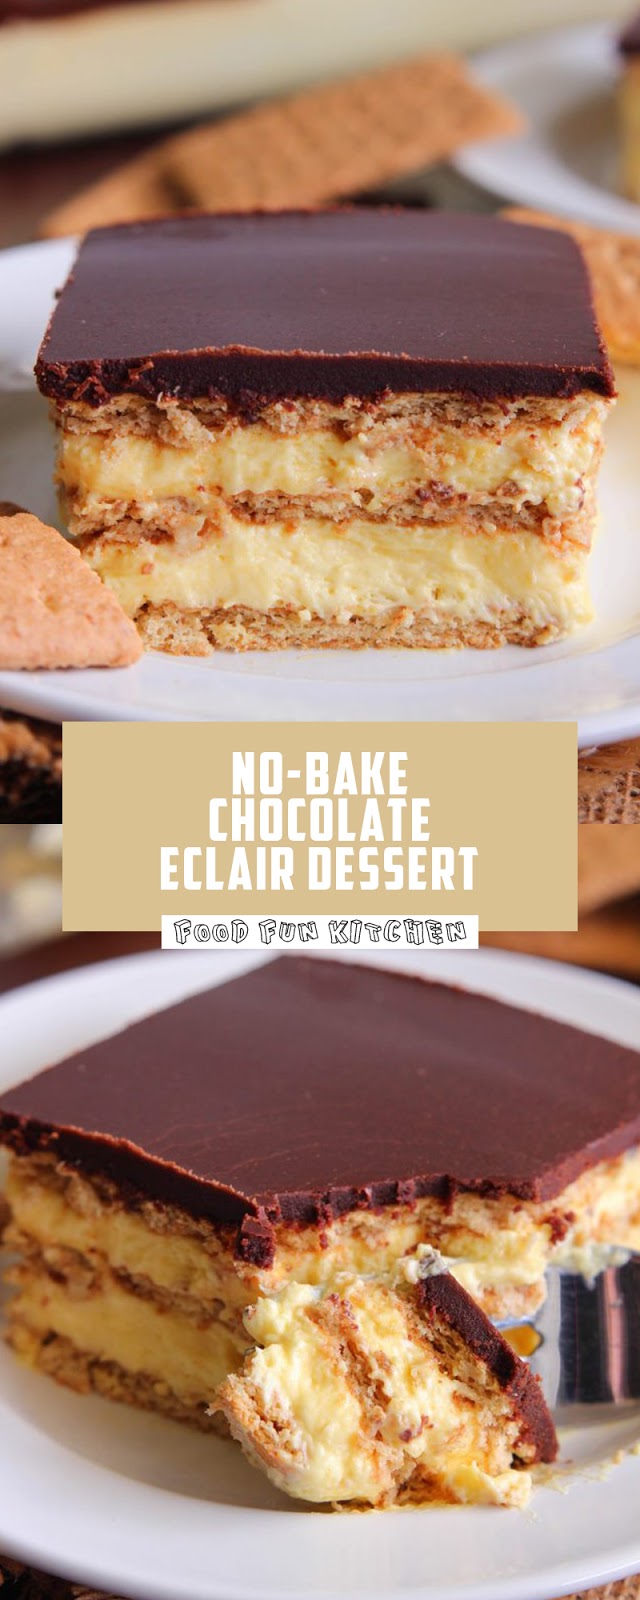 NO-BAKE CHOCOLATE ECLAIR DESSERT